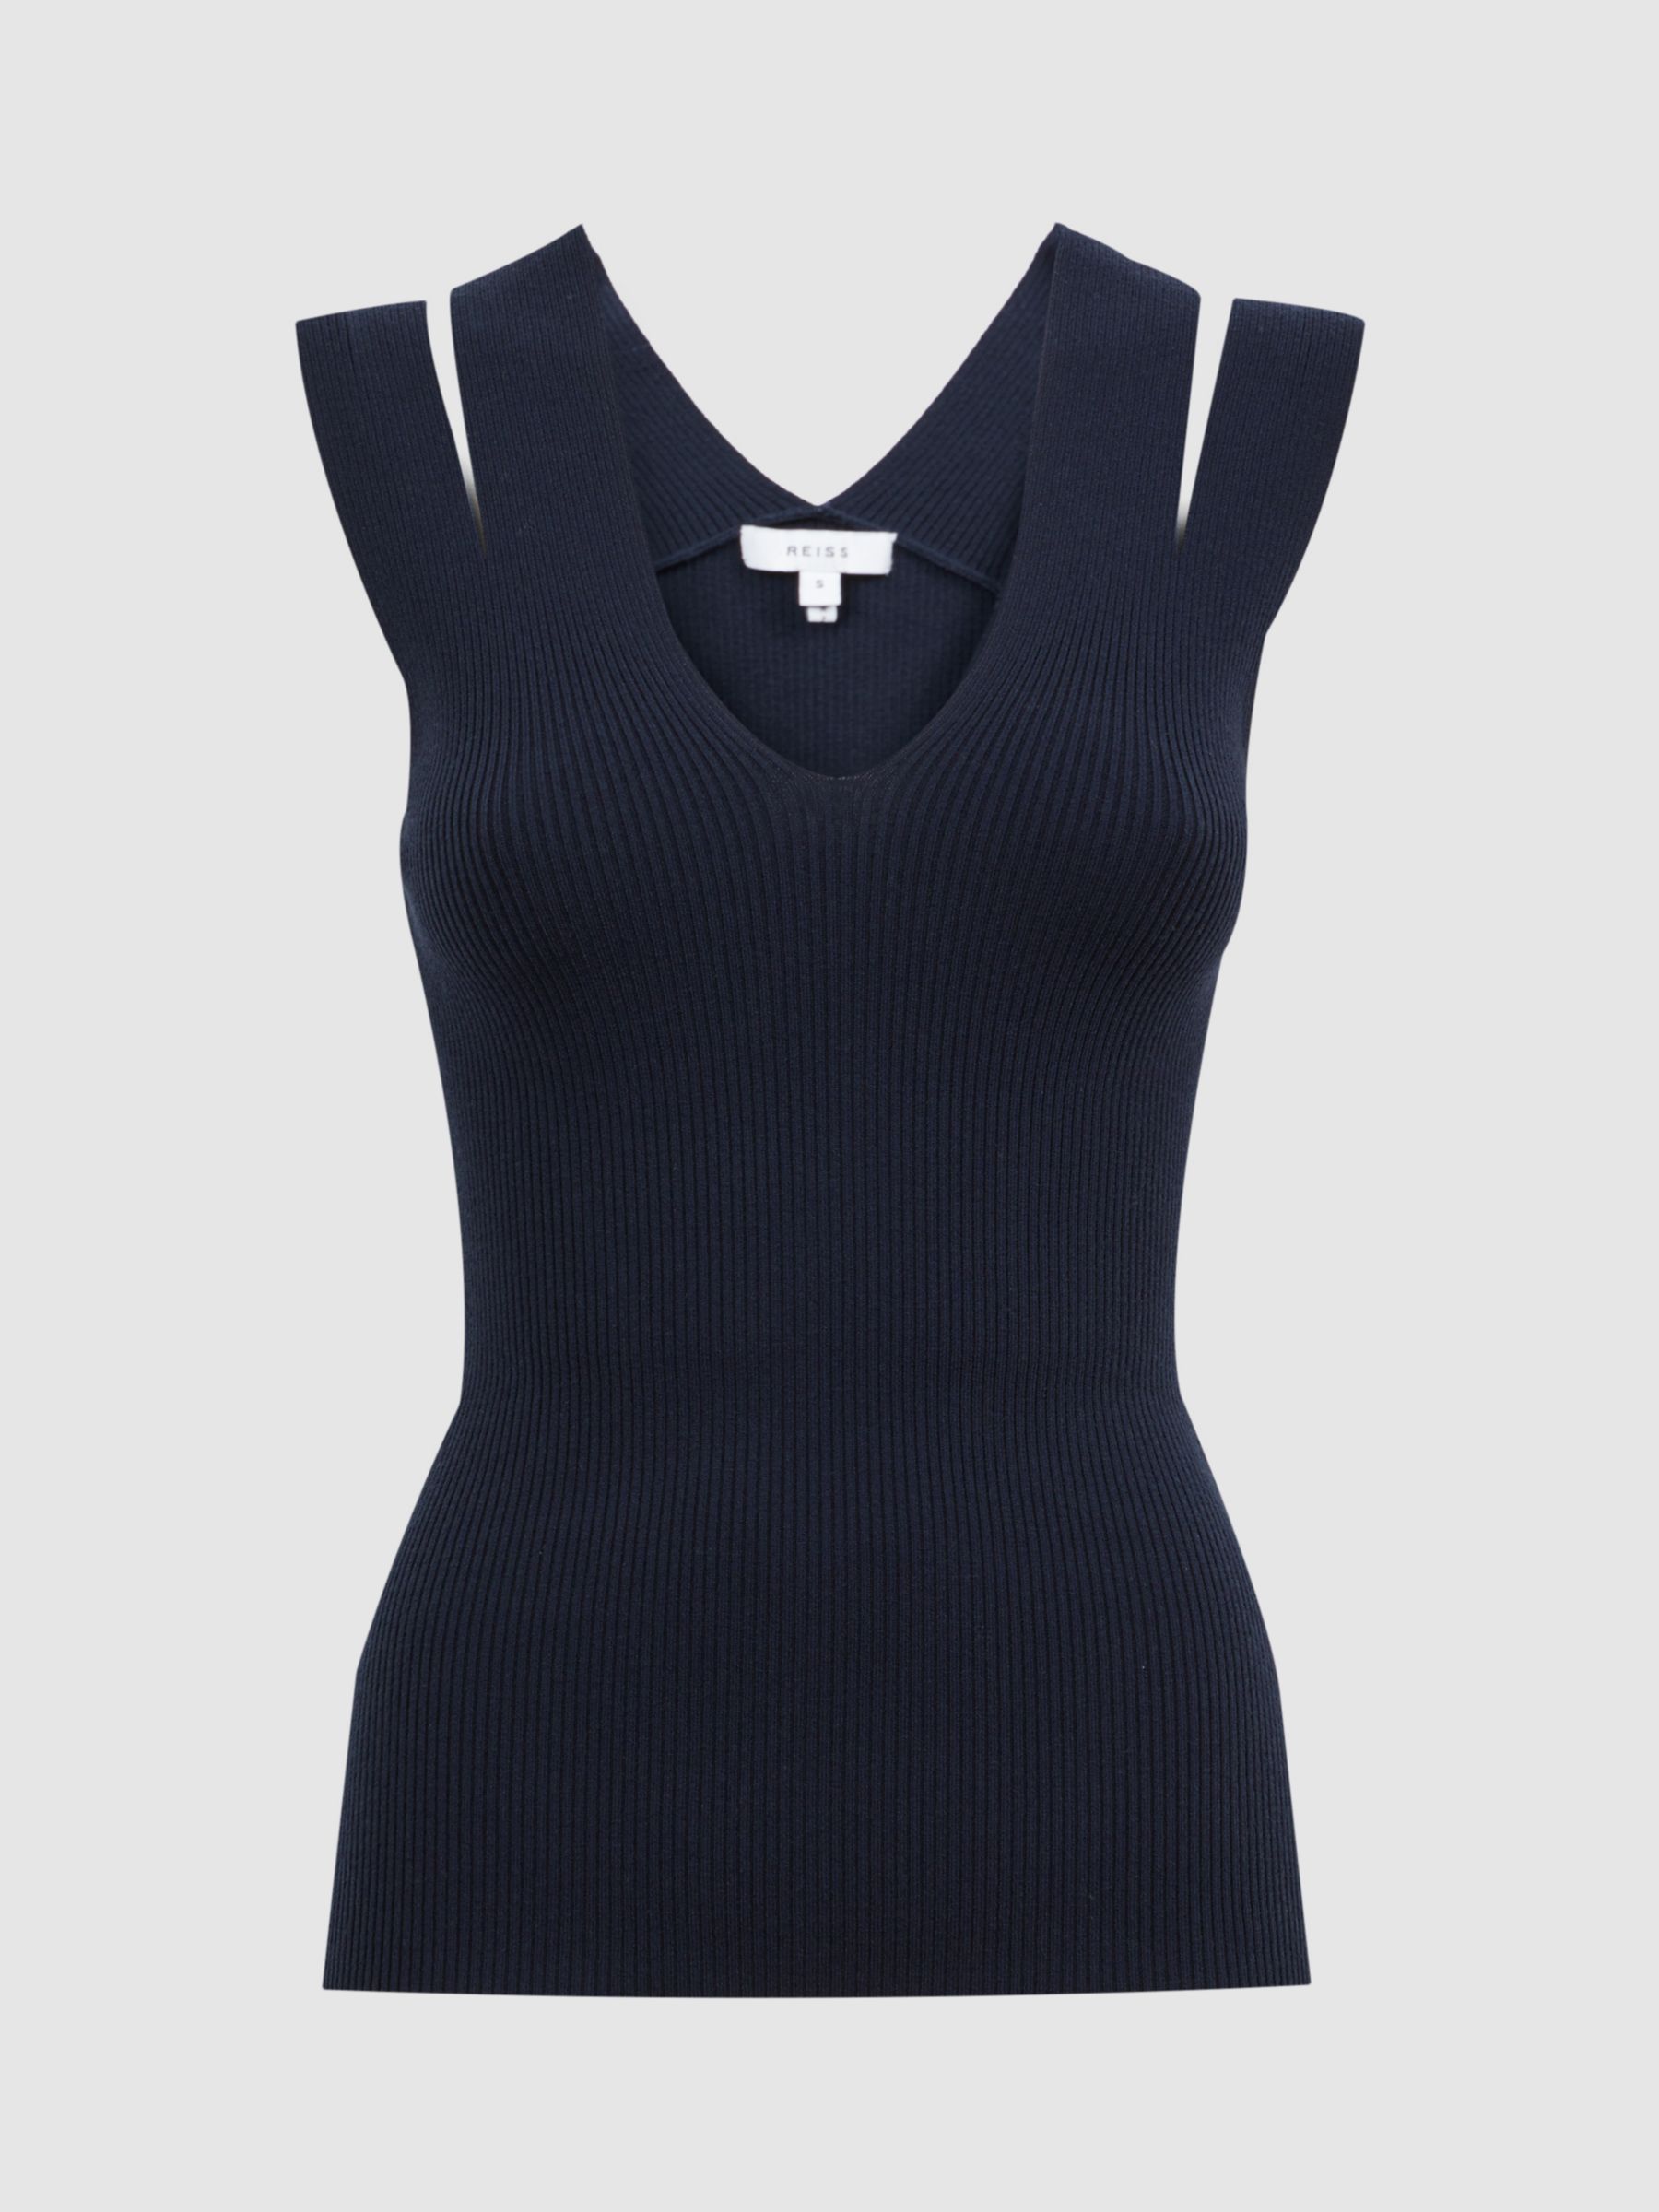 Reiss Nina Double Strap Rib Knit Vest Top, Navy, XS